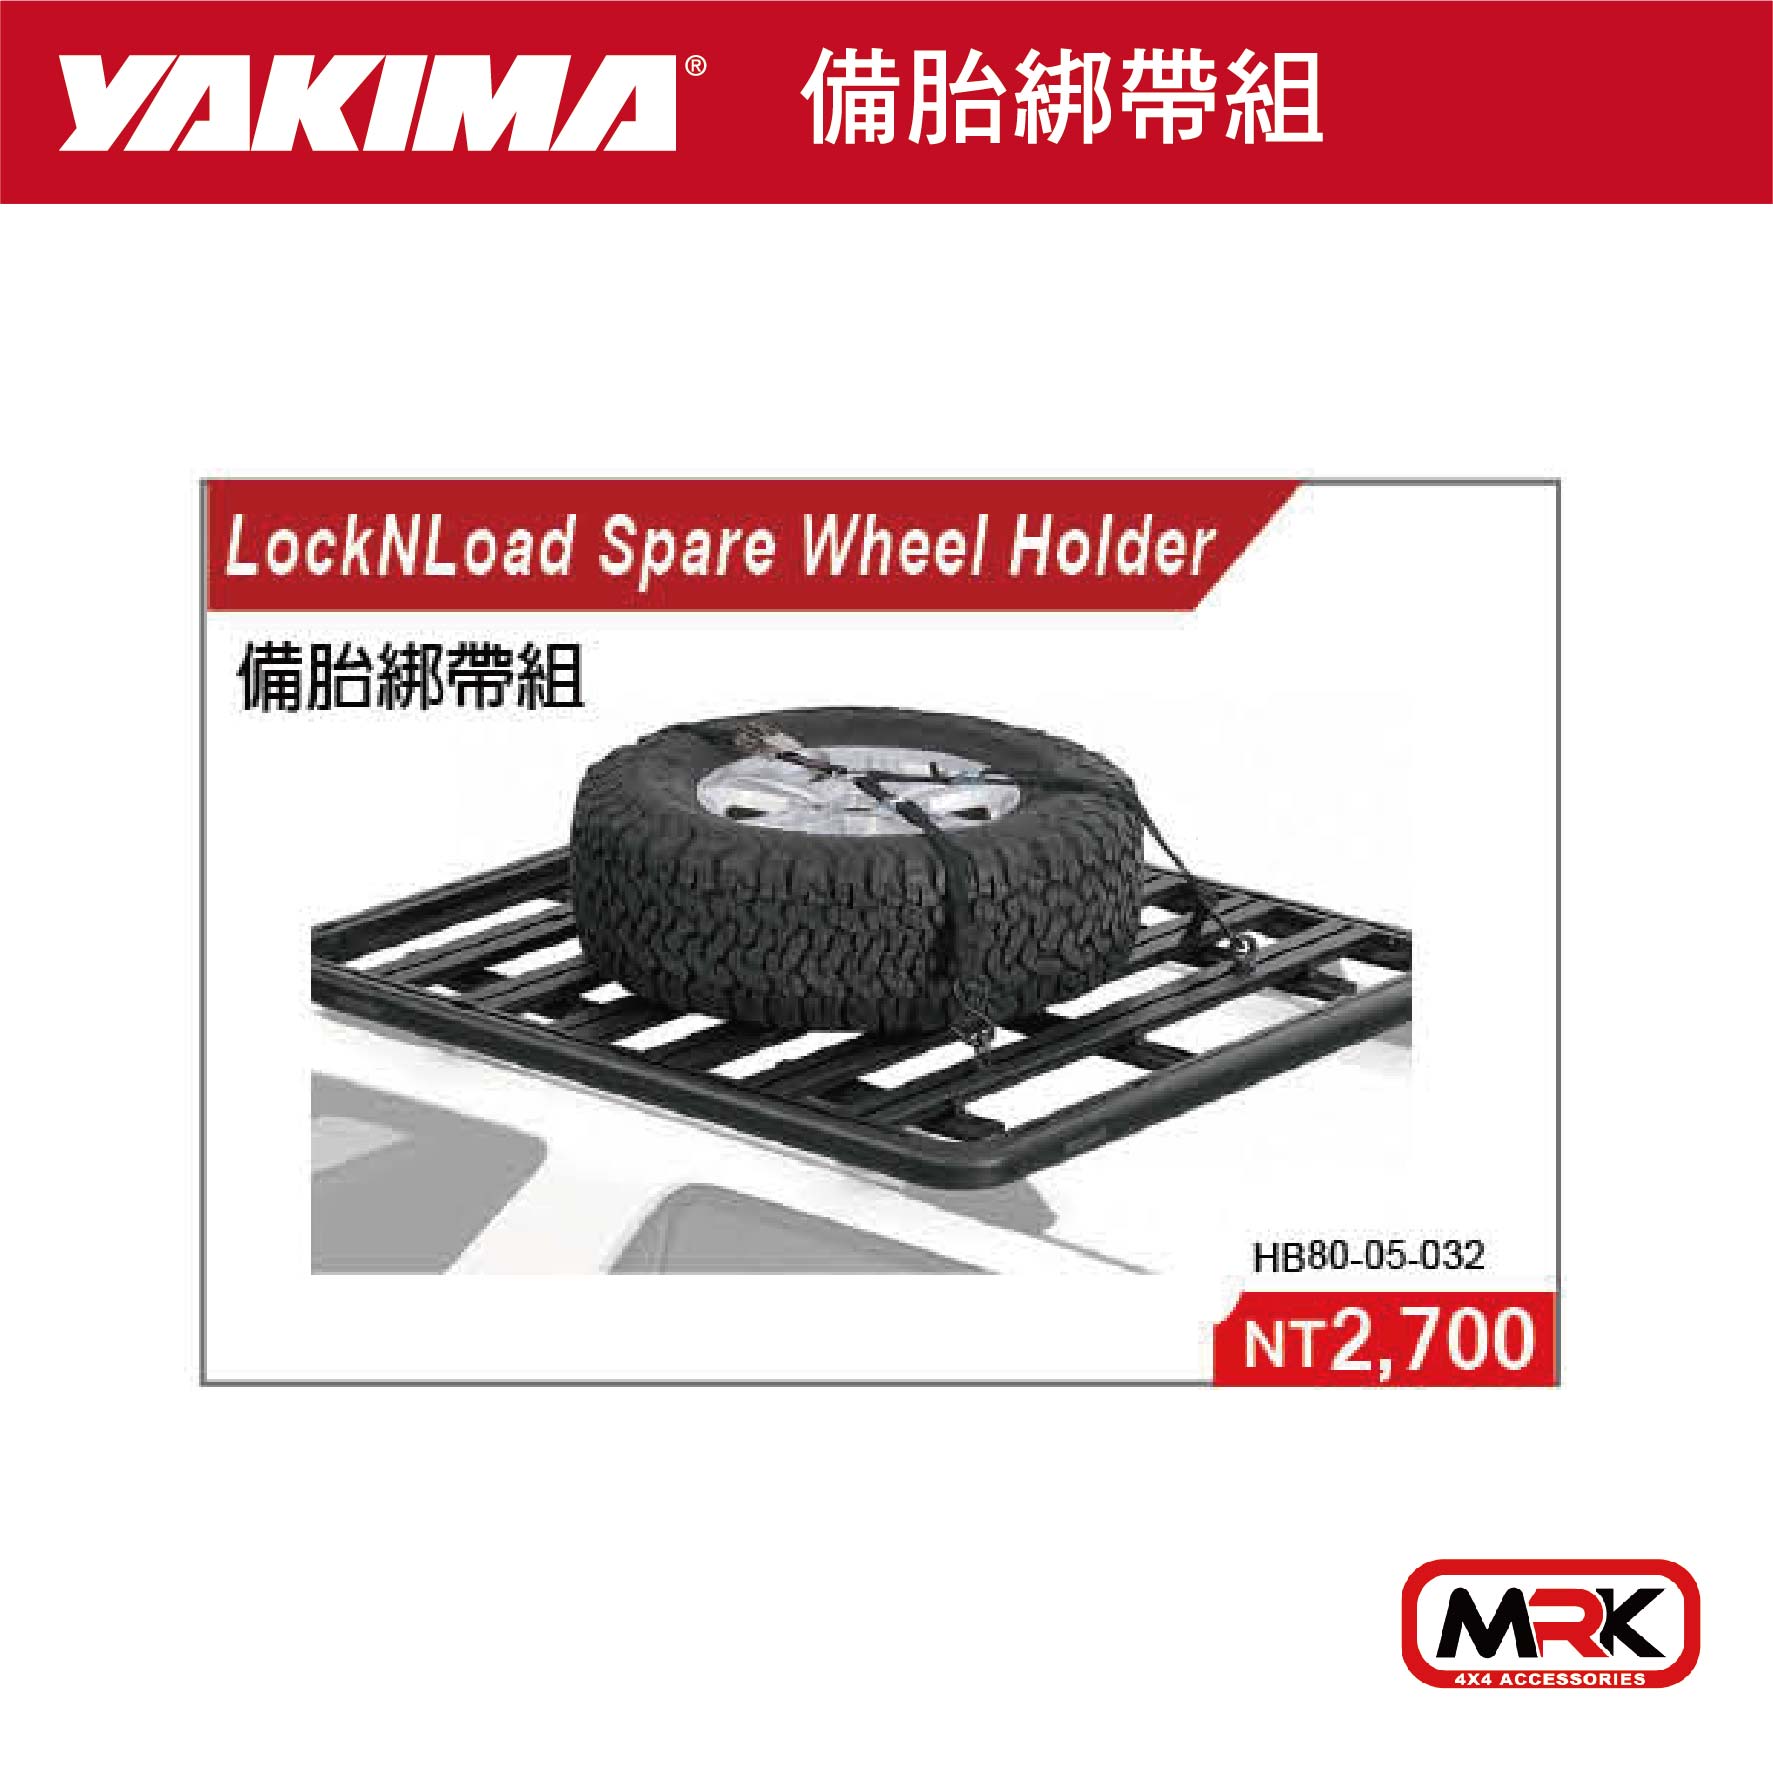 【MRK】YAKIMA locknload spare wheel 備胎綁帶組 HB80-50-032